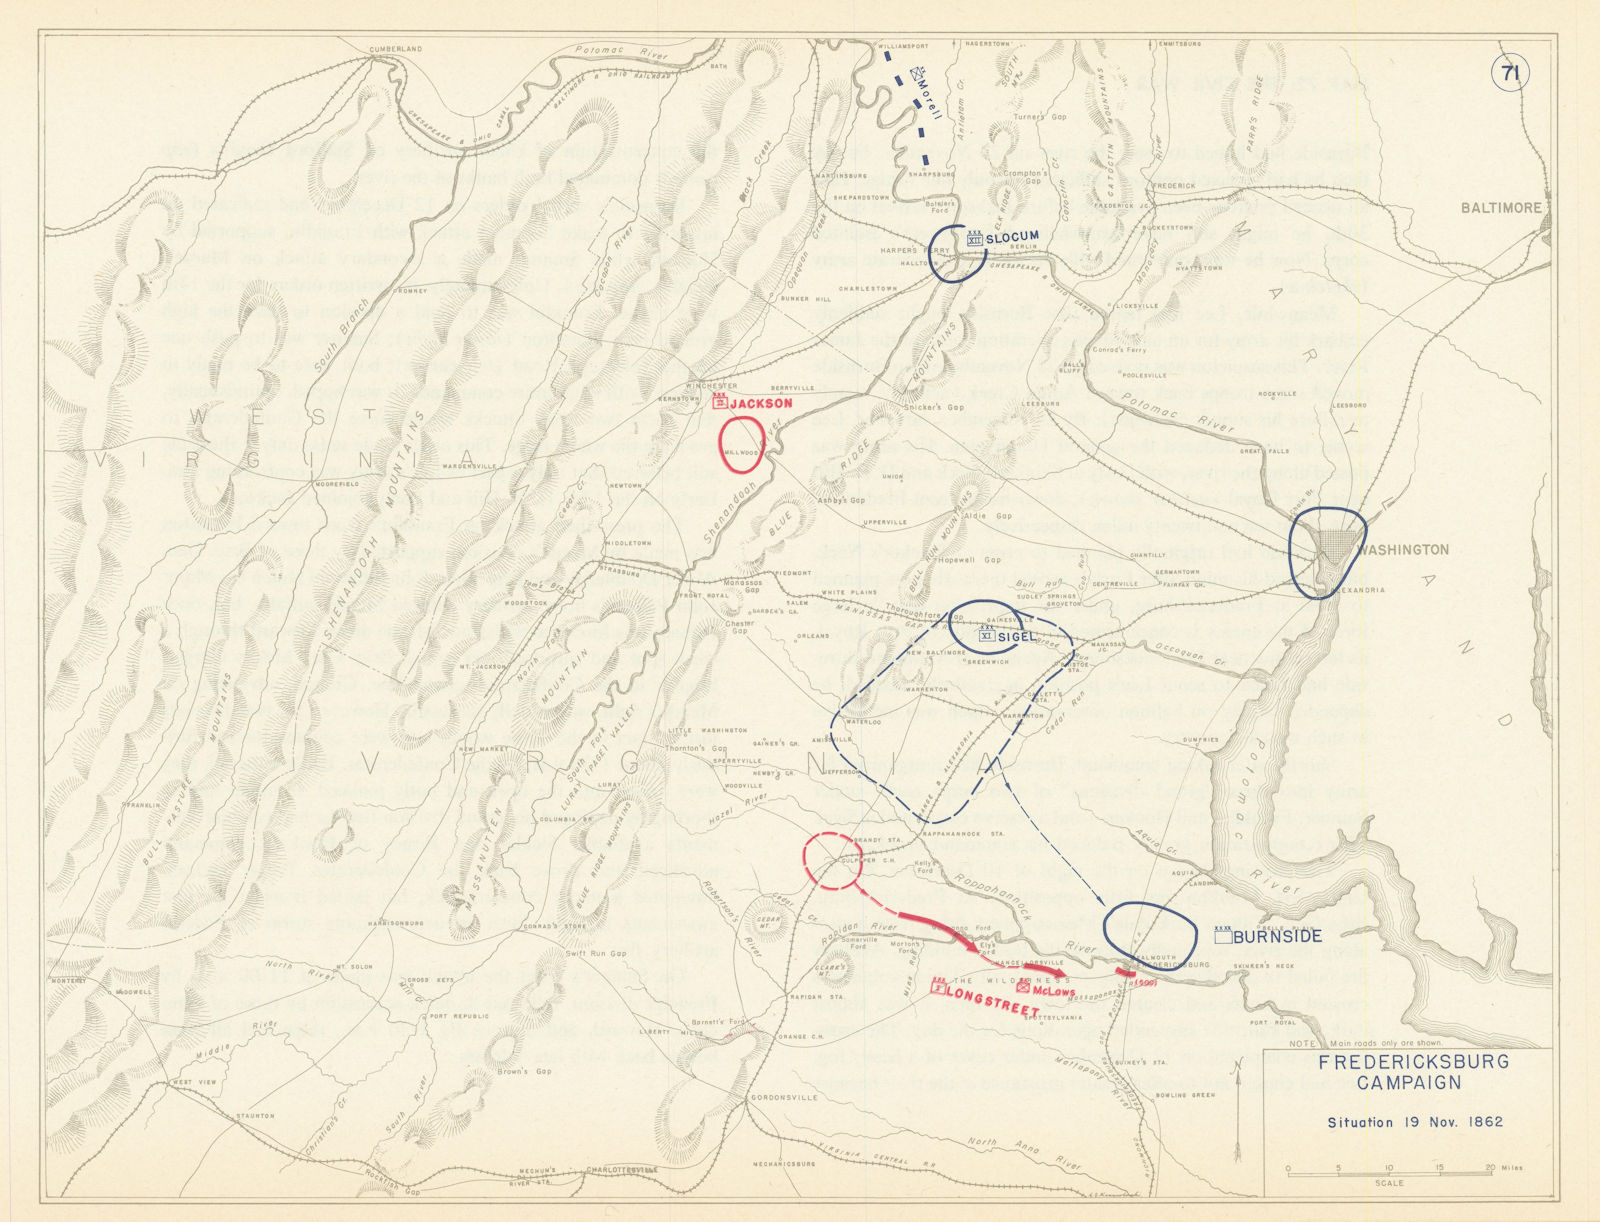 American Civil War. Situation 19 Nov 1862. Fredericksburg Campaign 1959 map